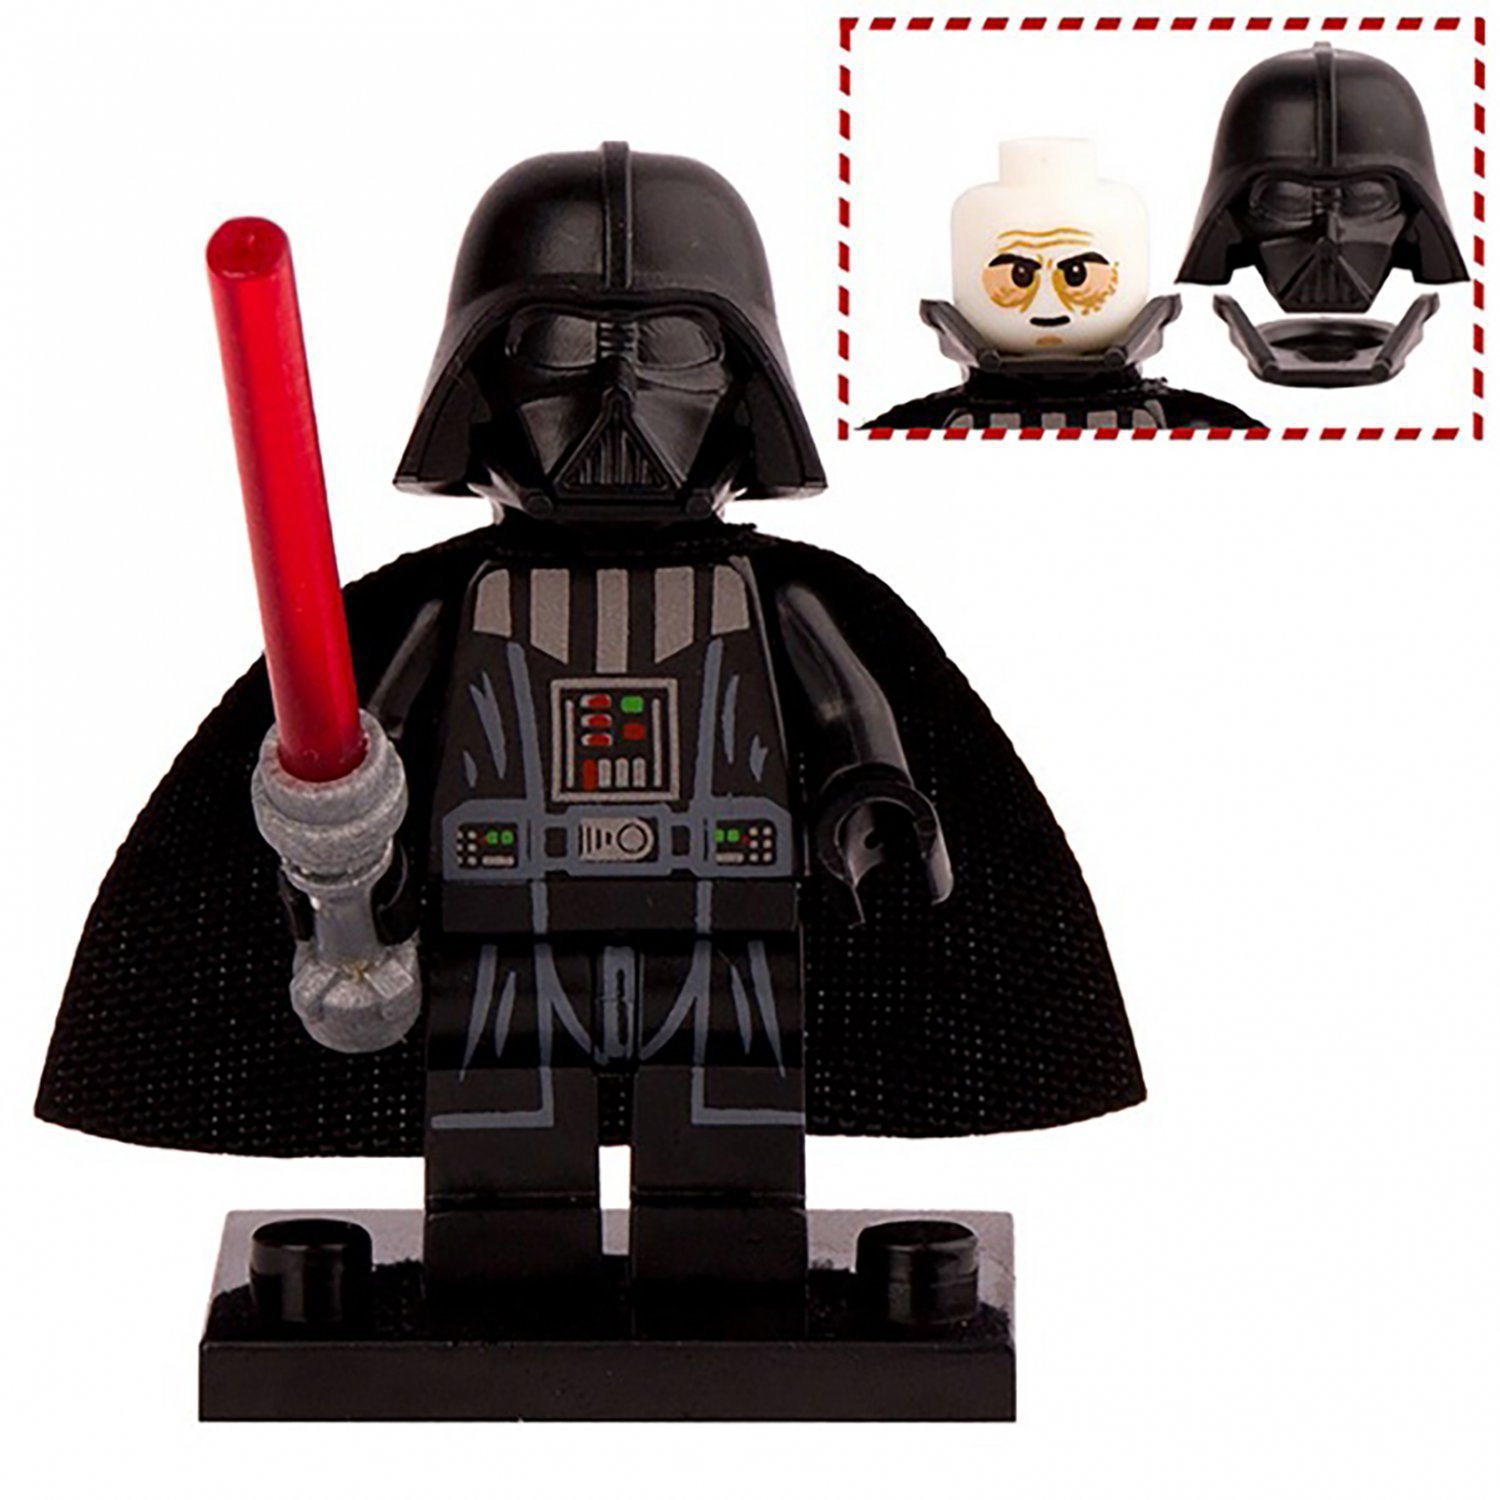 Minifigure Darth Vader Star Wars Building Lego Blocks Toys